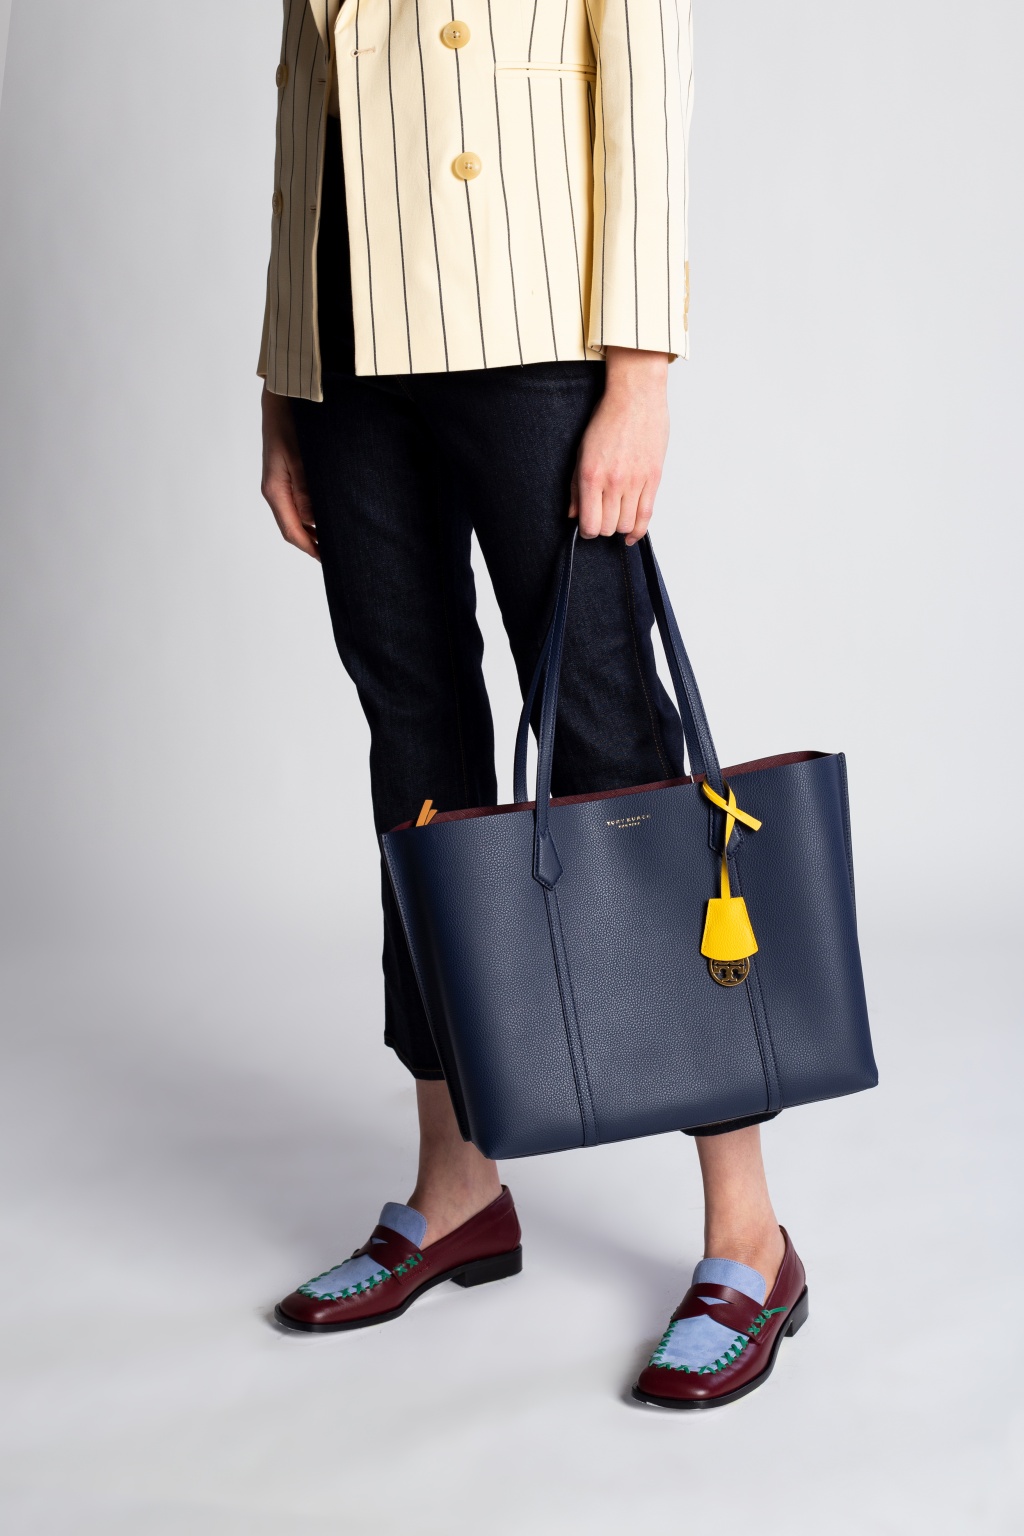 Tory Burch 'Perry Triple' tote bag, Women's Bags